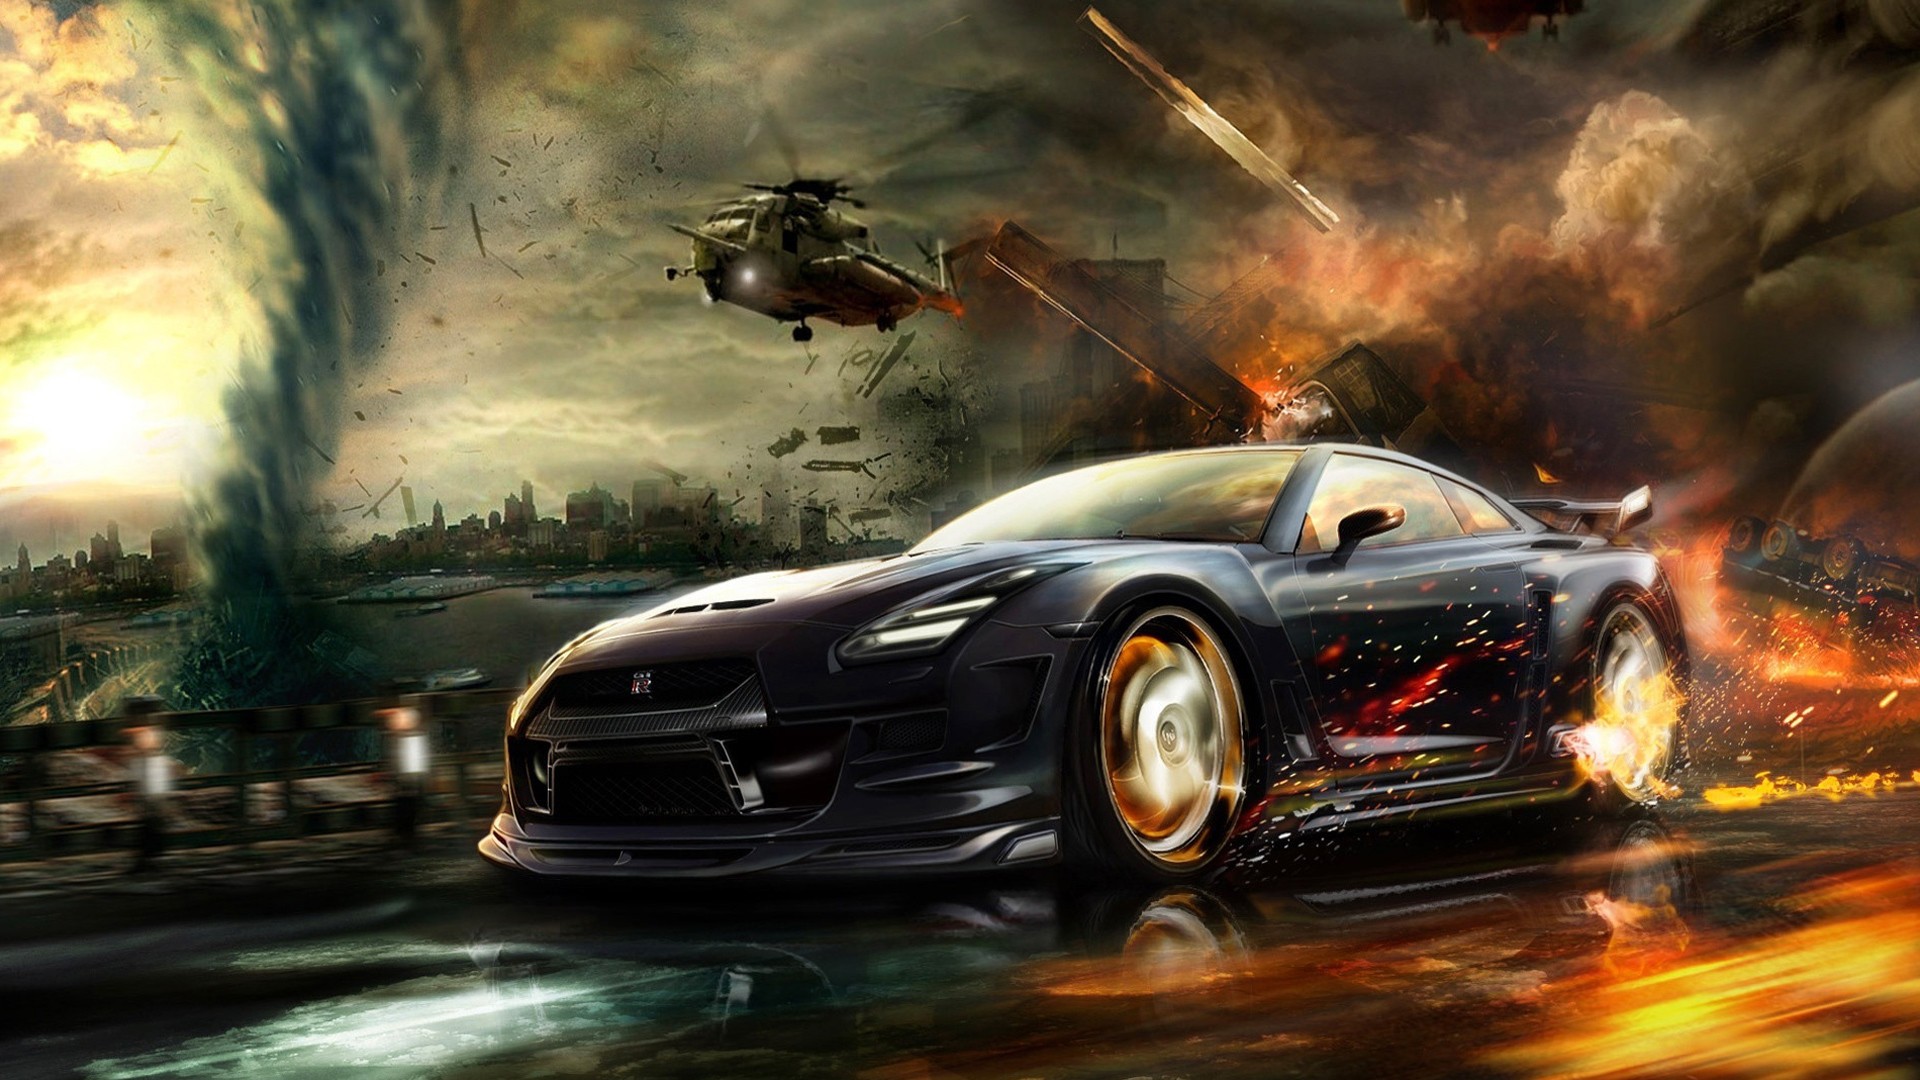 General 1920x1080 Nissan GT-R car photoshopped war vehicle artwork digital art fire Nissan helicopters backfire battle